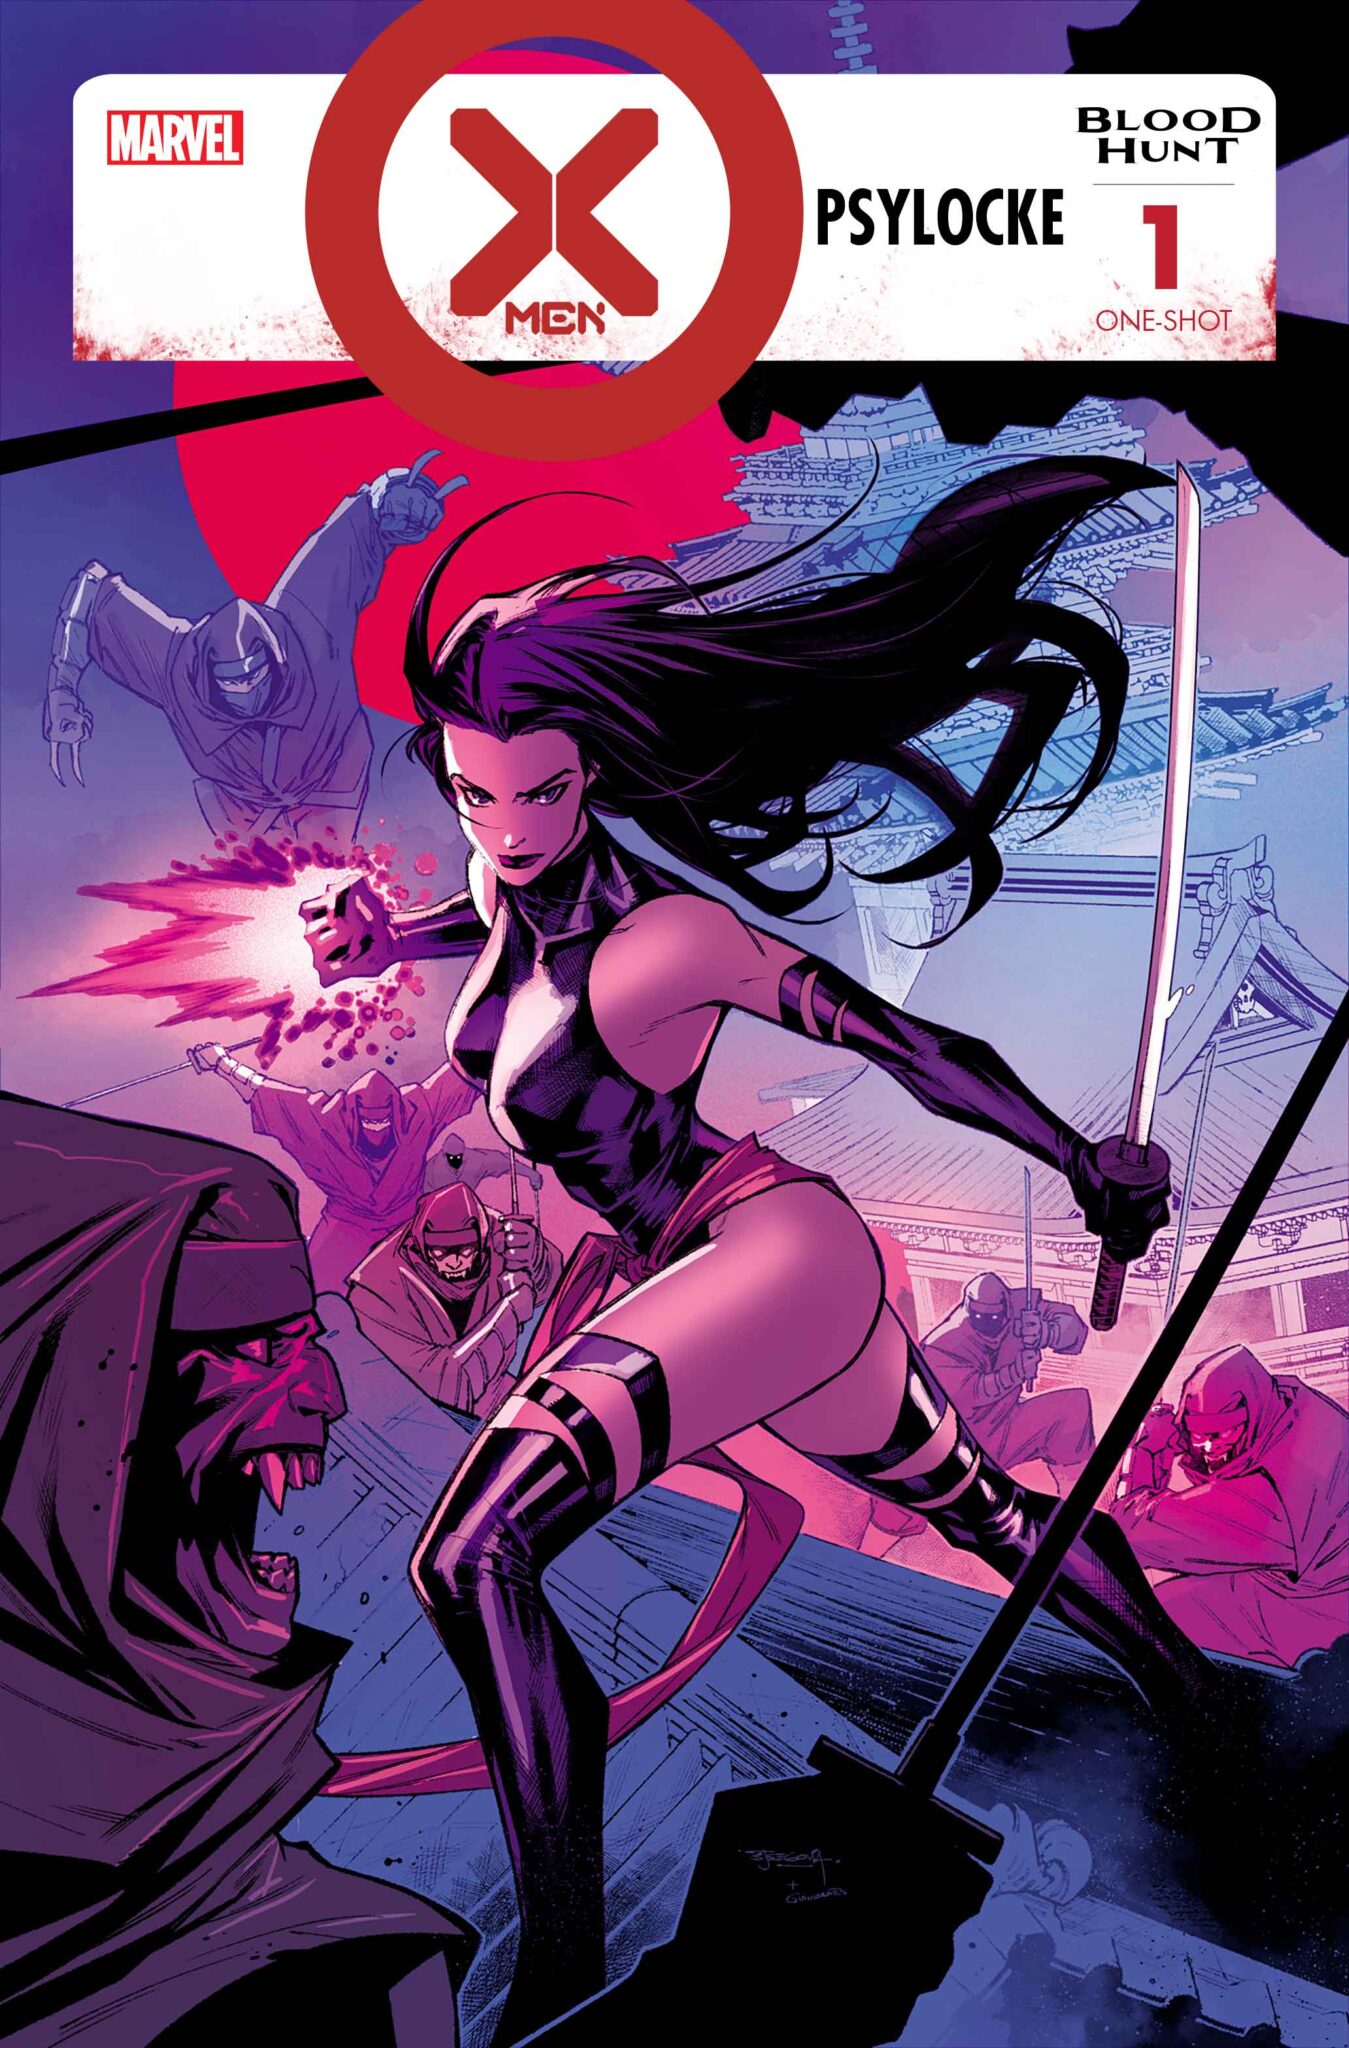 X-Men: Bloodhunt Psylocke cover